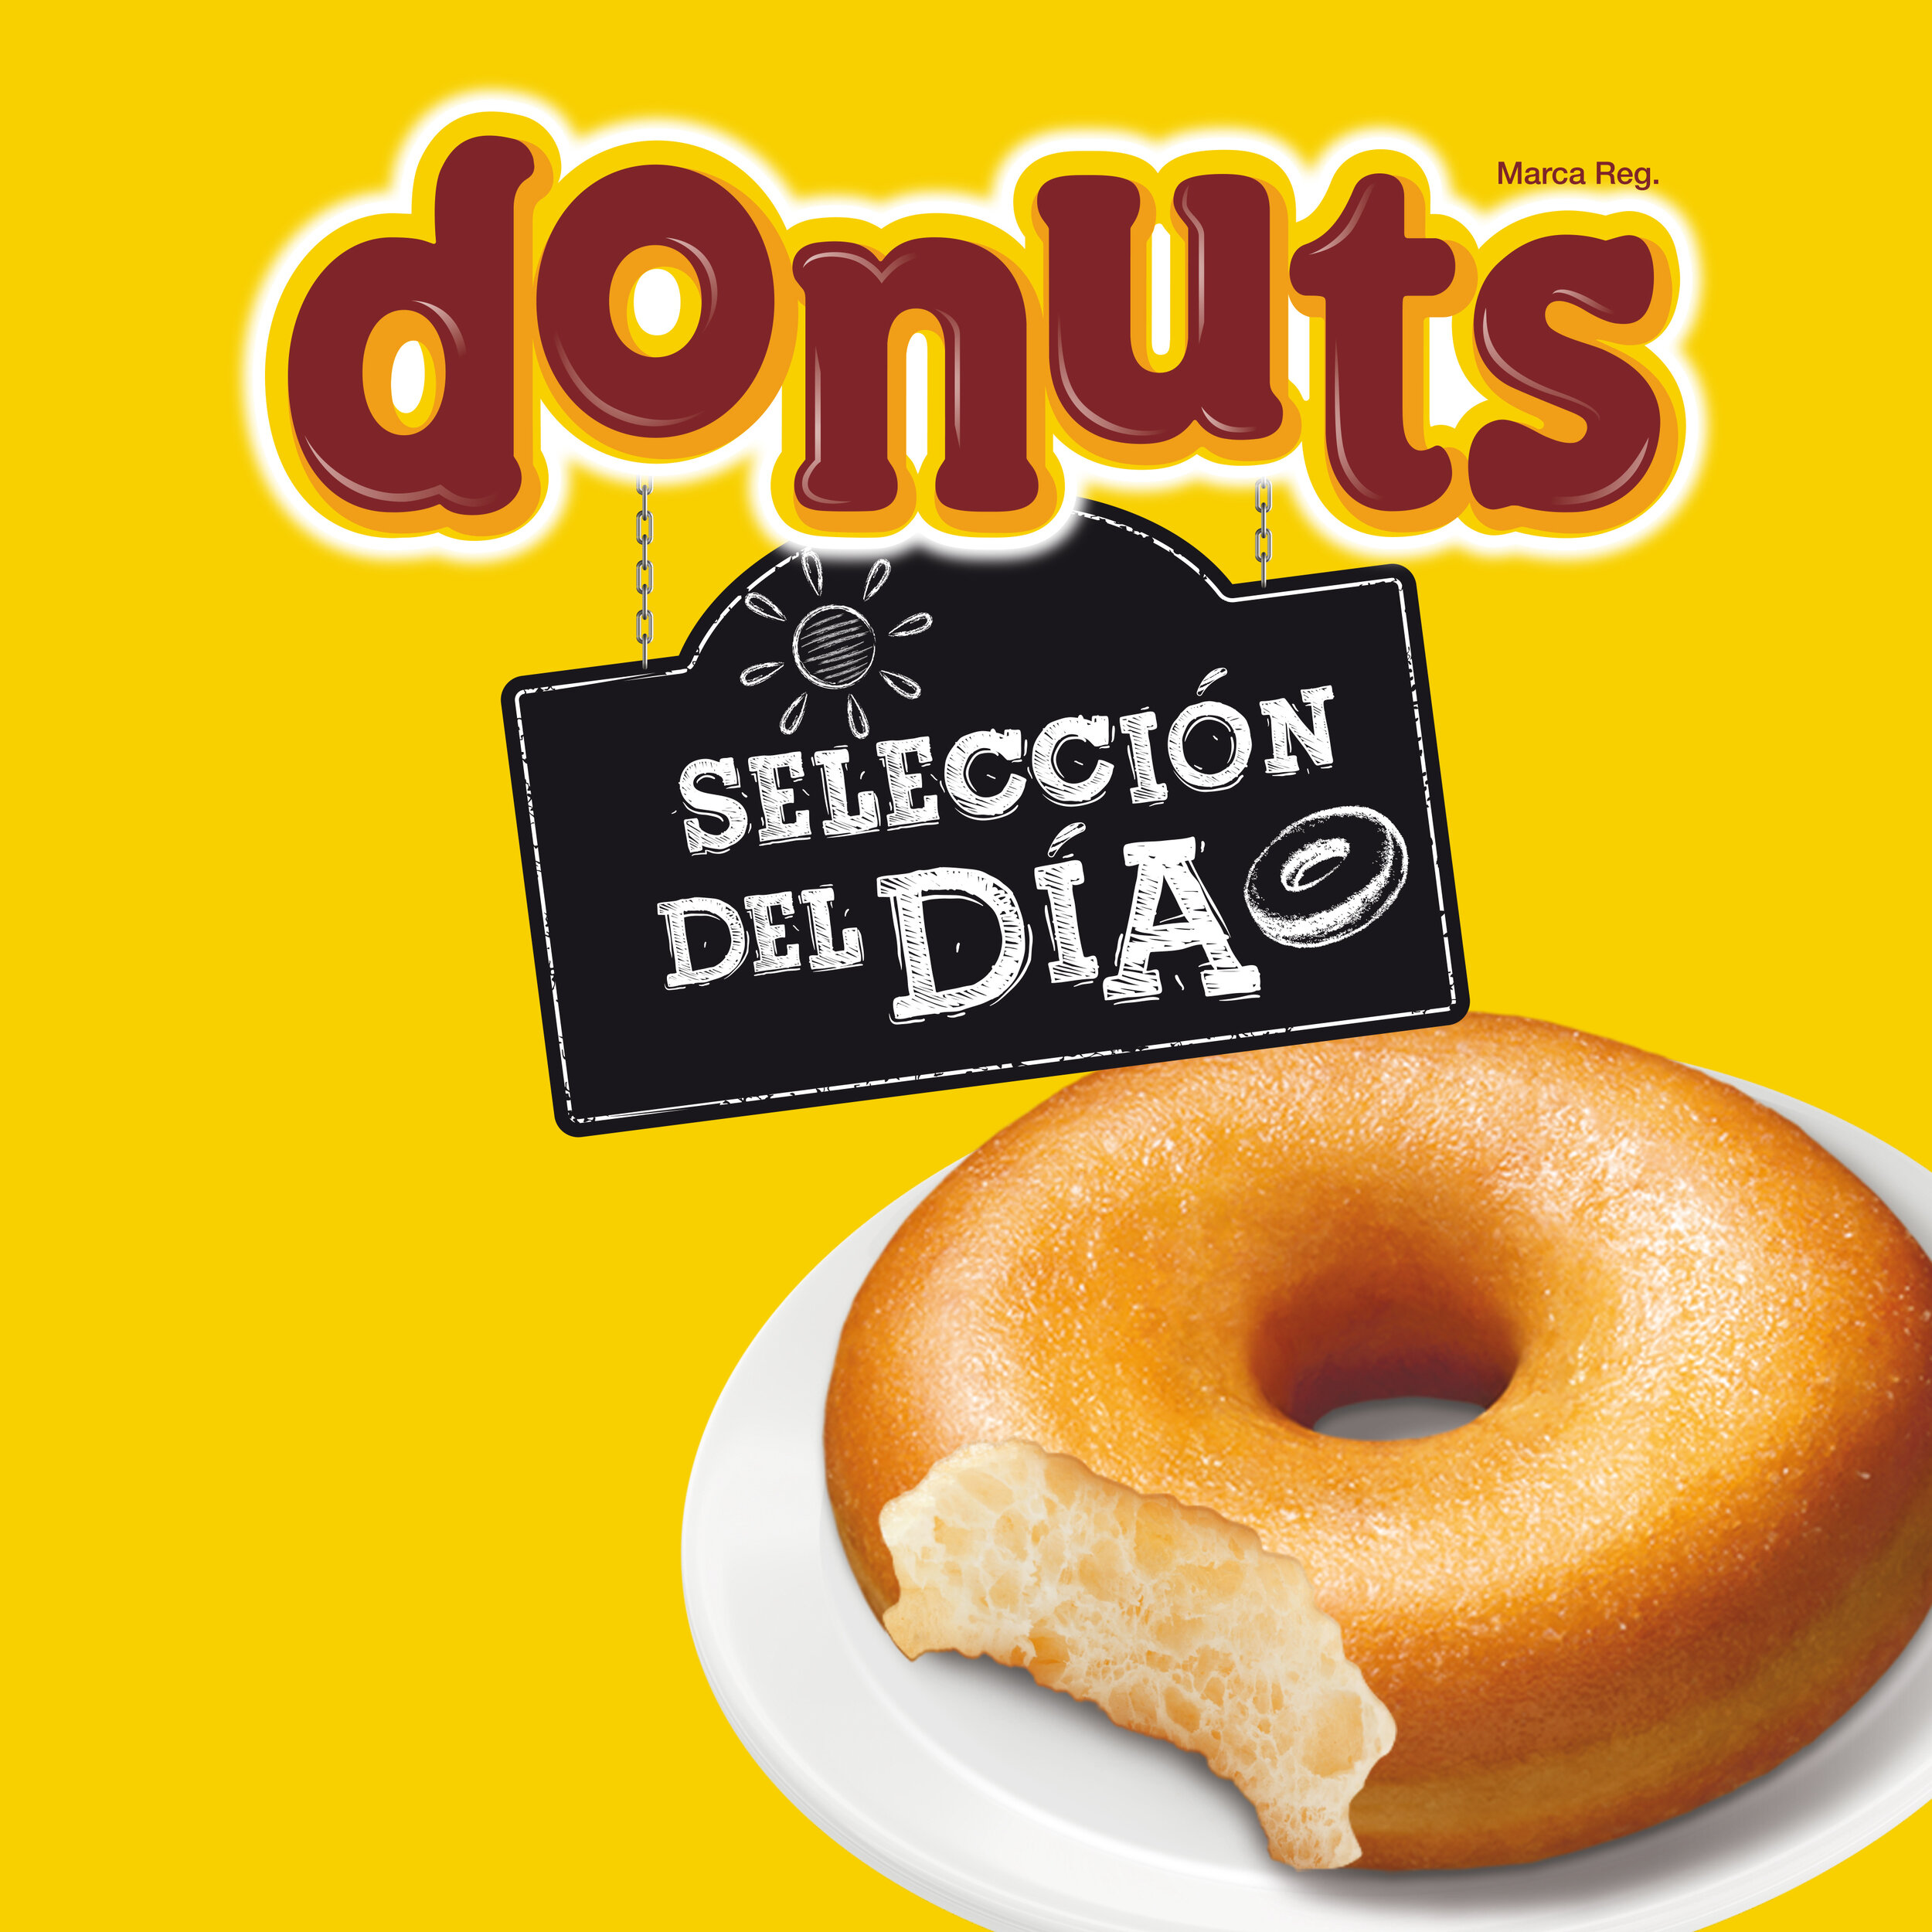 Donuts-Seleccion-del-dia_01.jpg